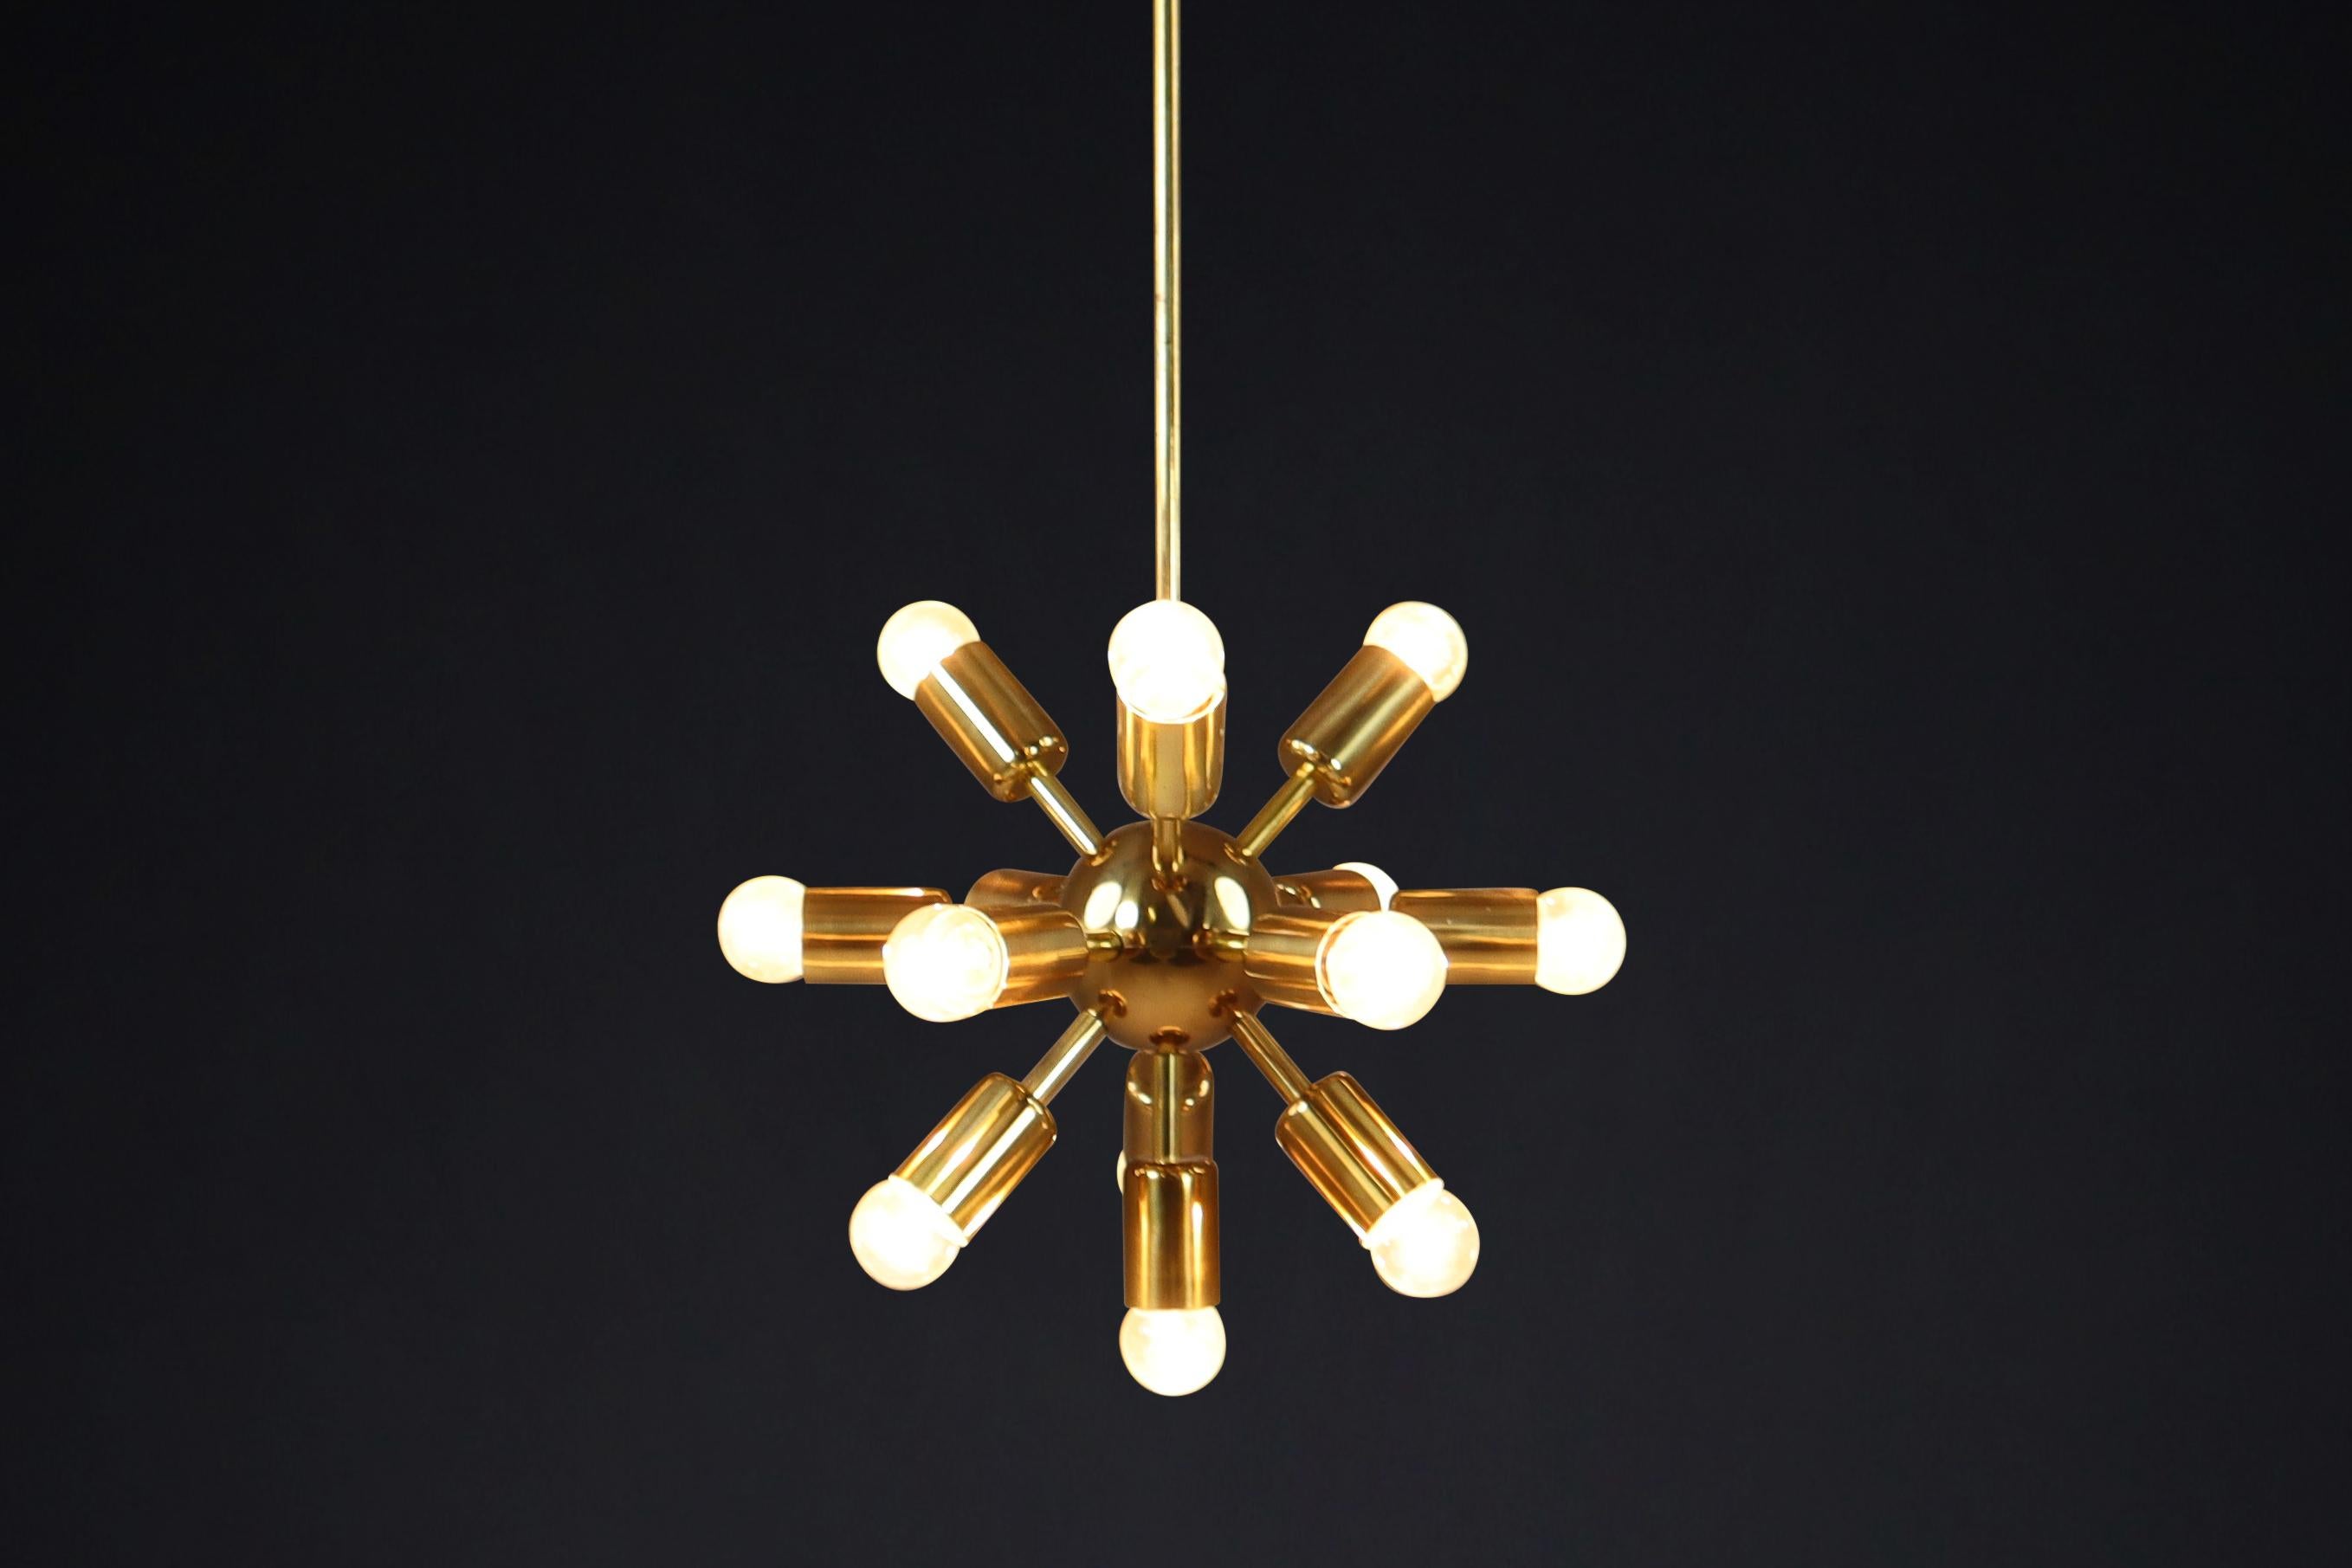 20th Century Midcentury Brass Sputnik Chandeliers with Twelve Lights by Drupol, Praque 1960s For Sale